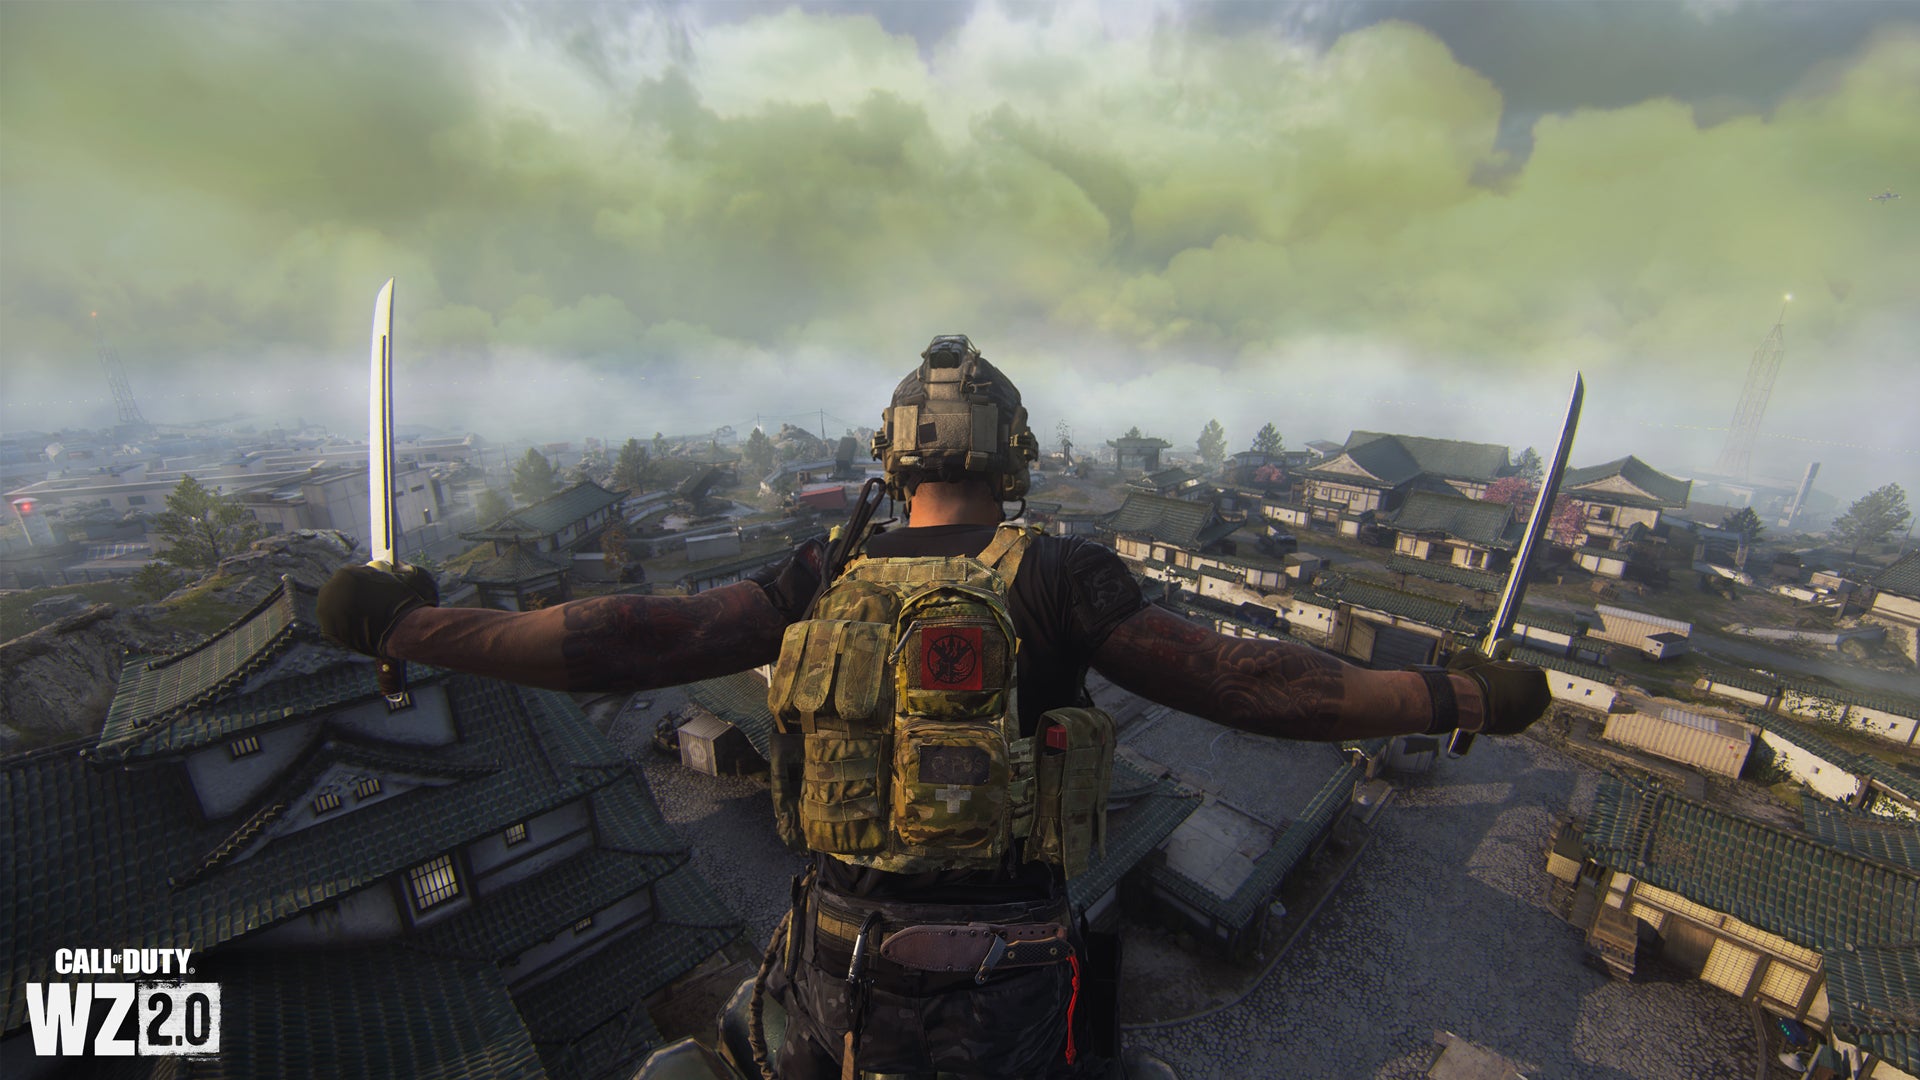 PlayStation 5, Call of Duty: Modern Warfare 2 lead US in January - NPD